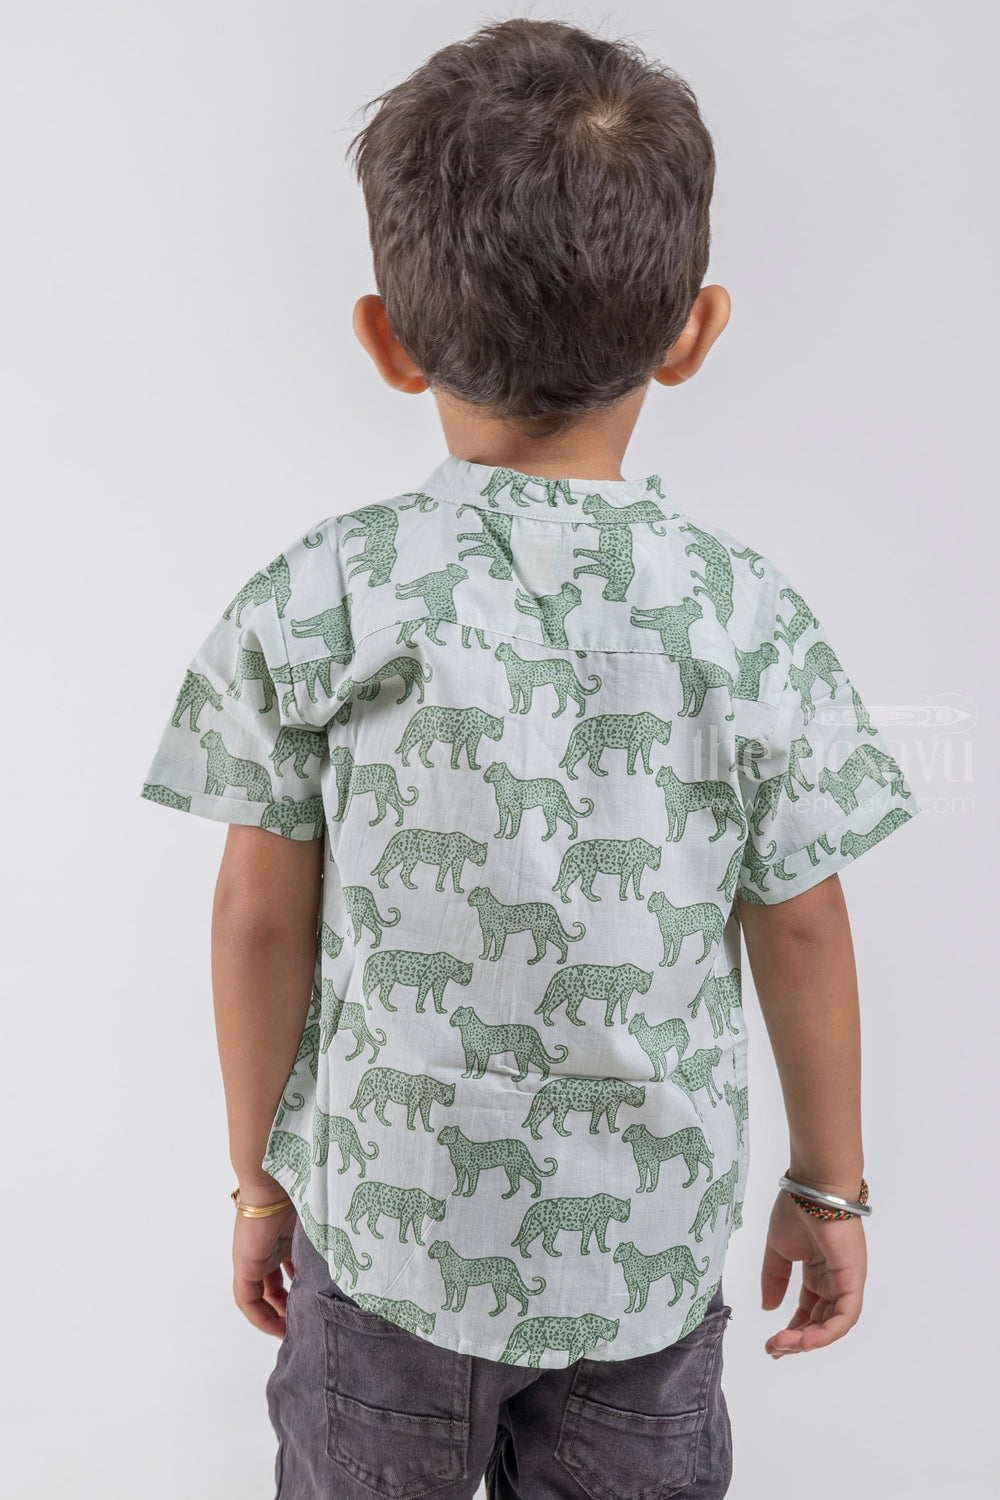 The Nesavu Boys Cotton Shirt Leopard Print Shirt for Boys | Pure Cotton | Nesavu | Exude Confidence and Style psr silks Nesavu